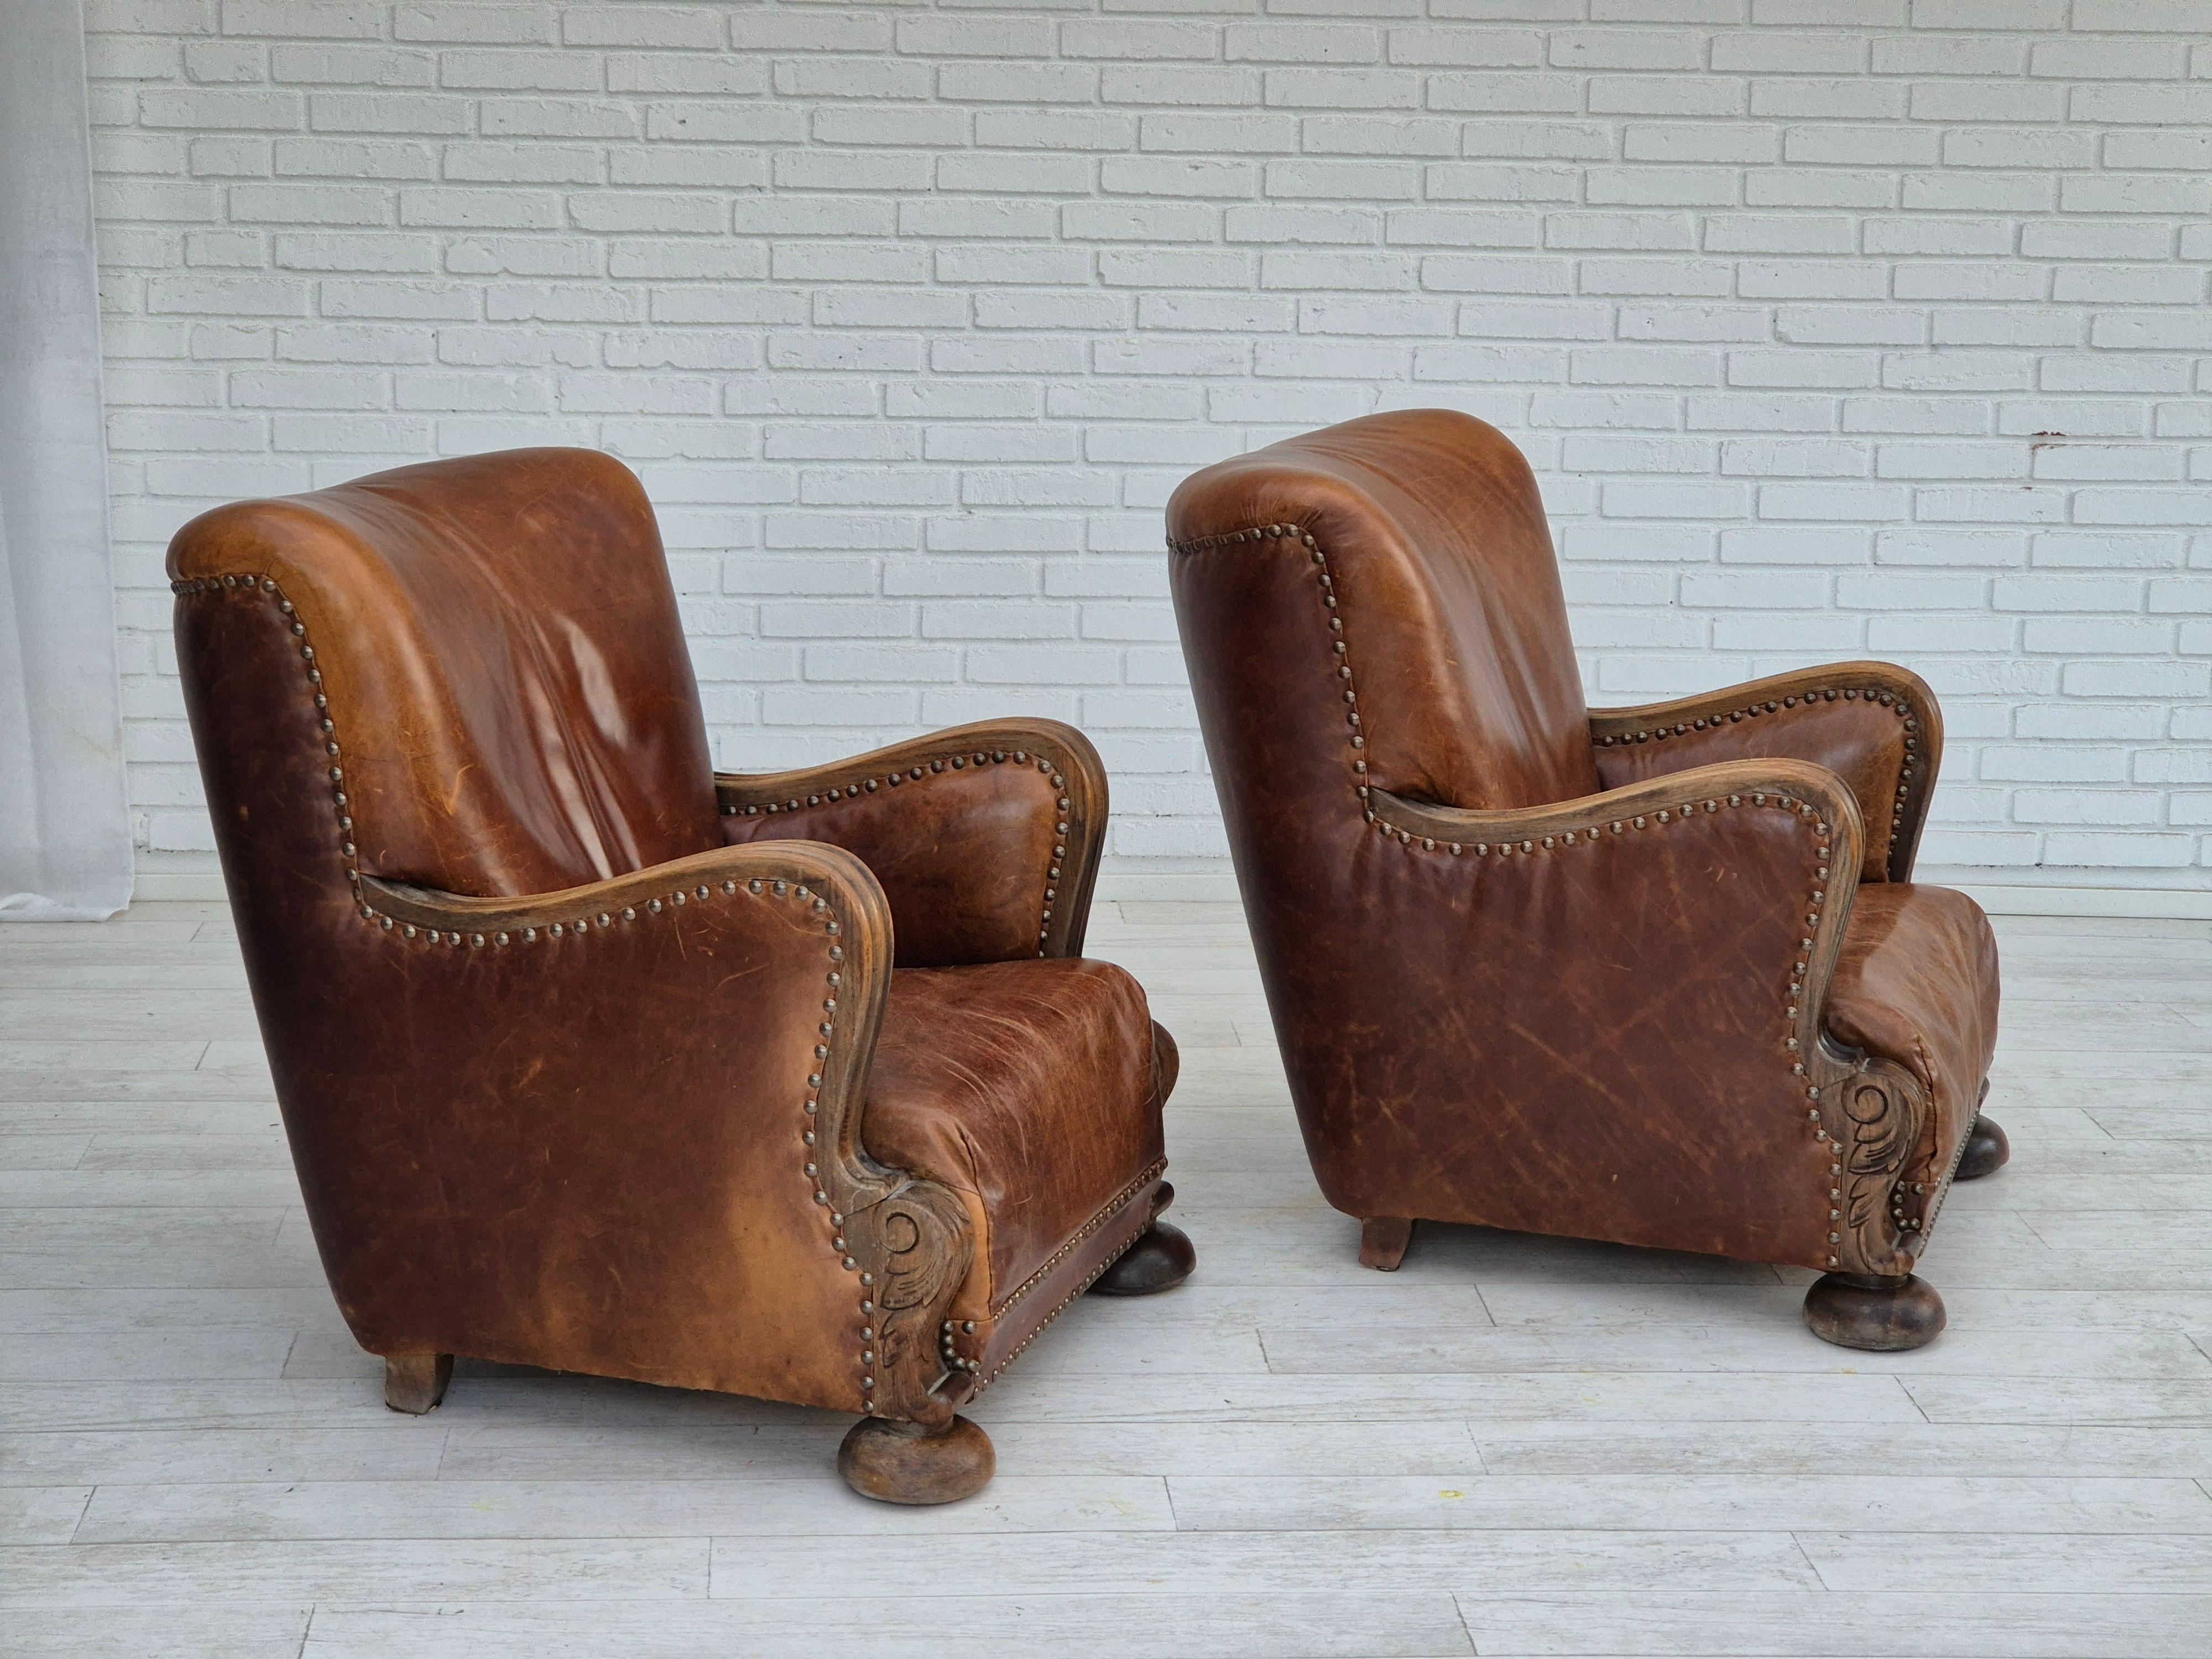 Scandinavian Modern 1950-60s, Danish relax chair, original condition, leather, oak wood. For Sale